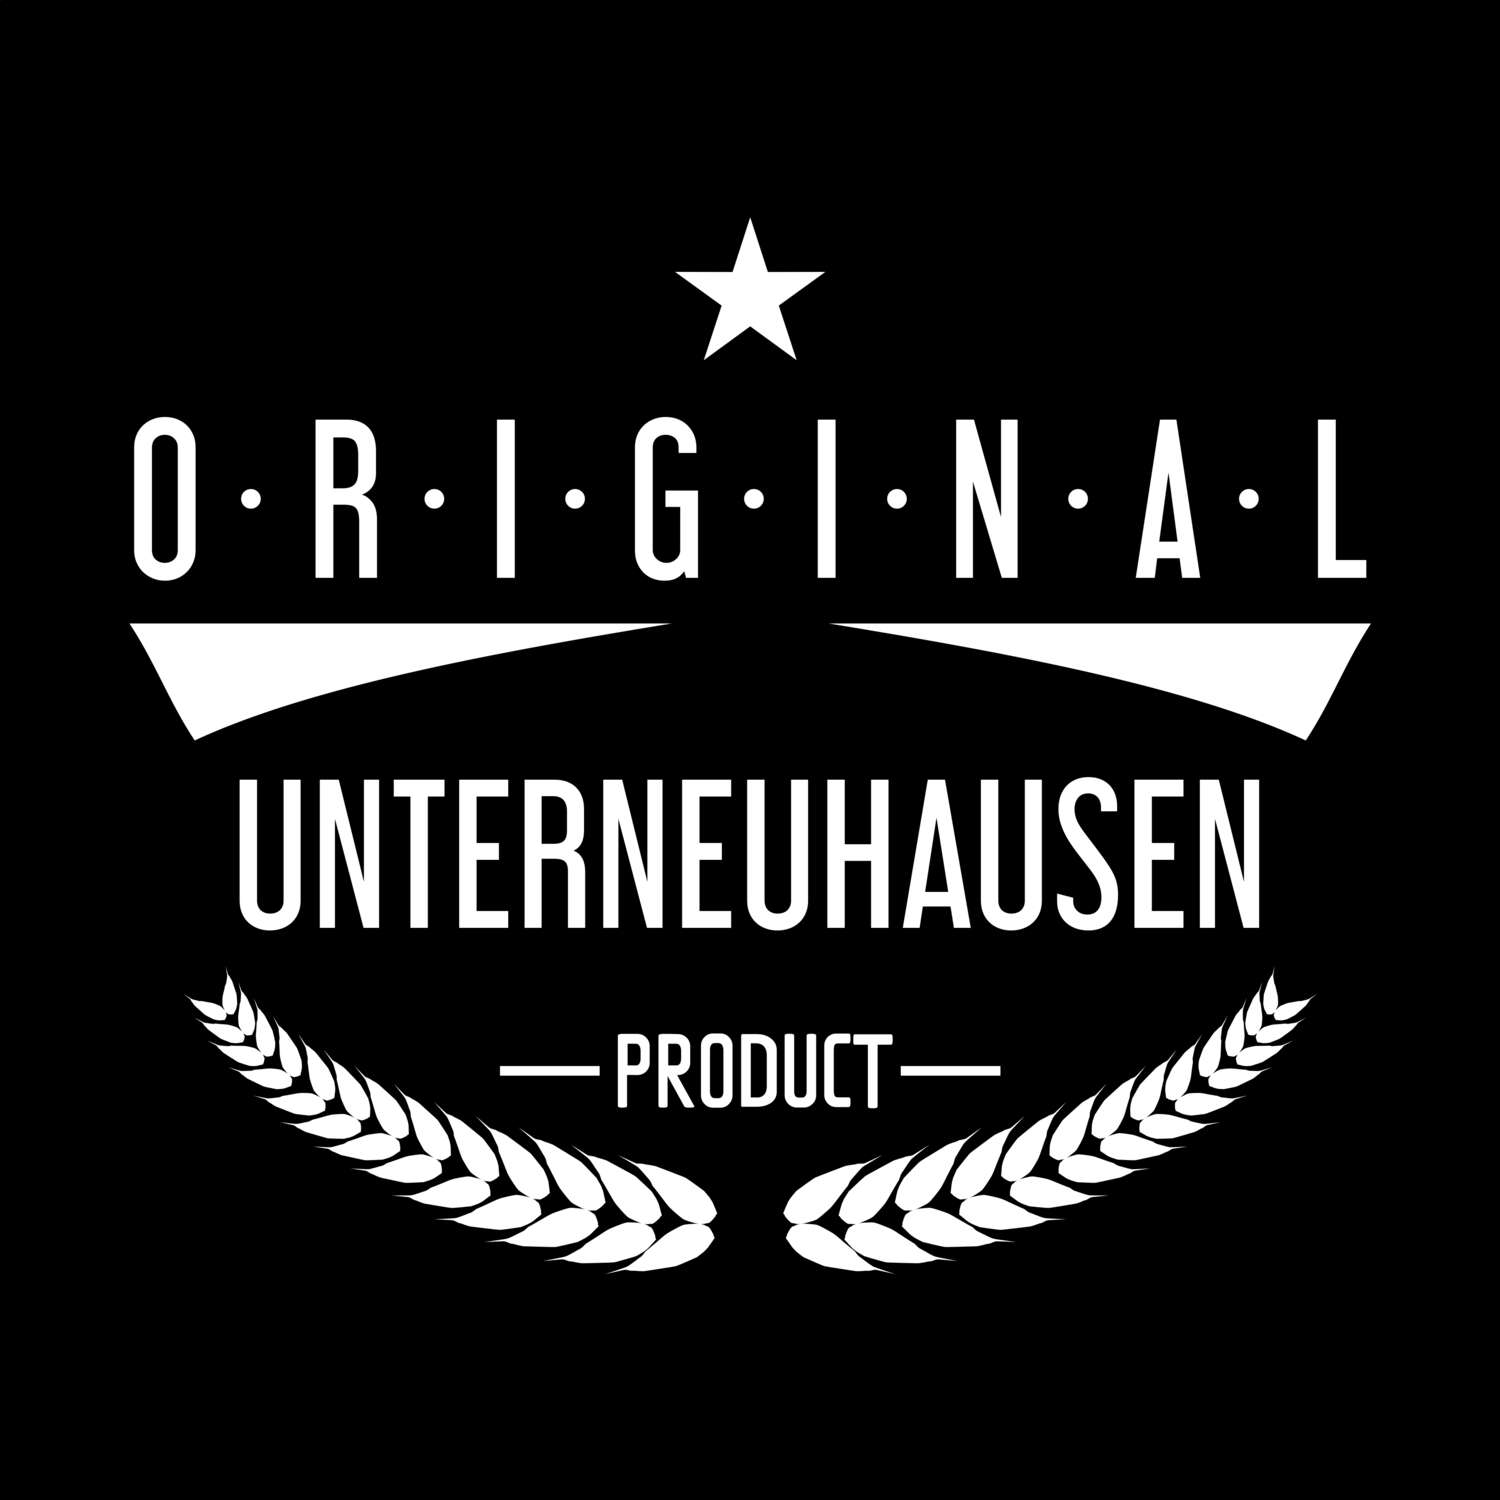 Unterneuhausen T-Shirt »Original Product«